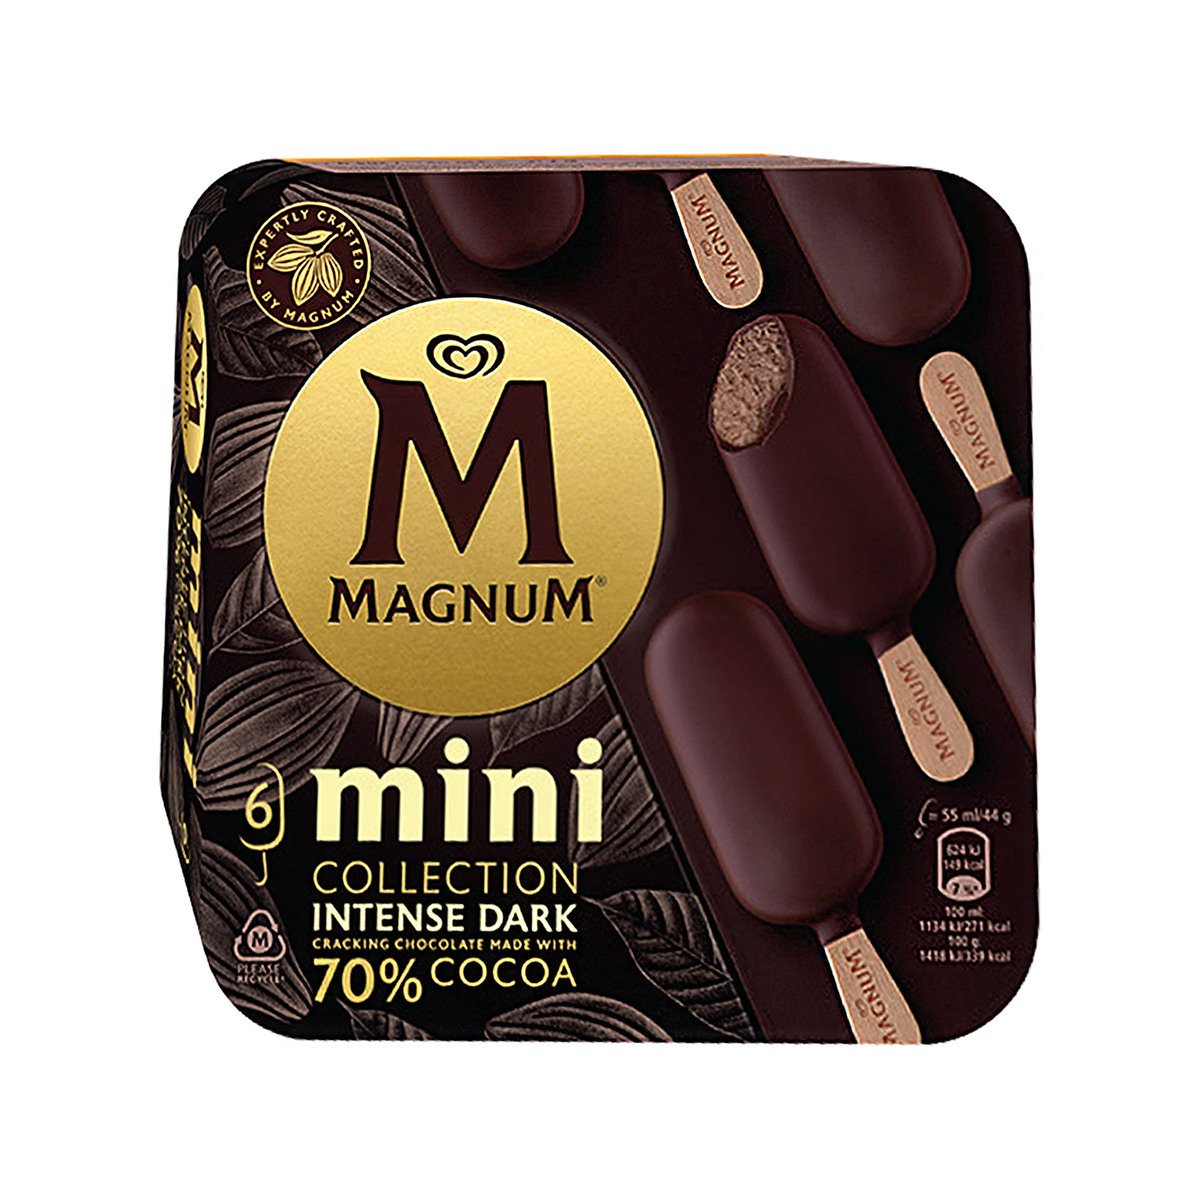 Magnum Mini Collection Intense Dark Ice Cream Stick, 6 x 55 ml